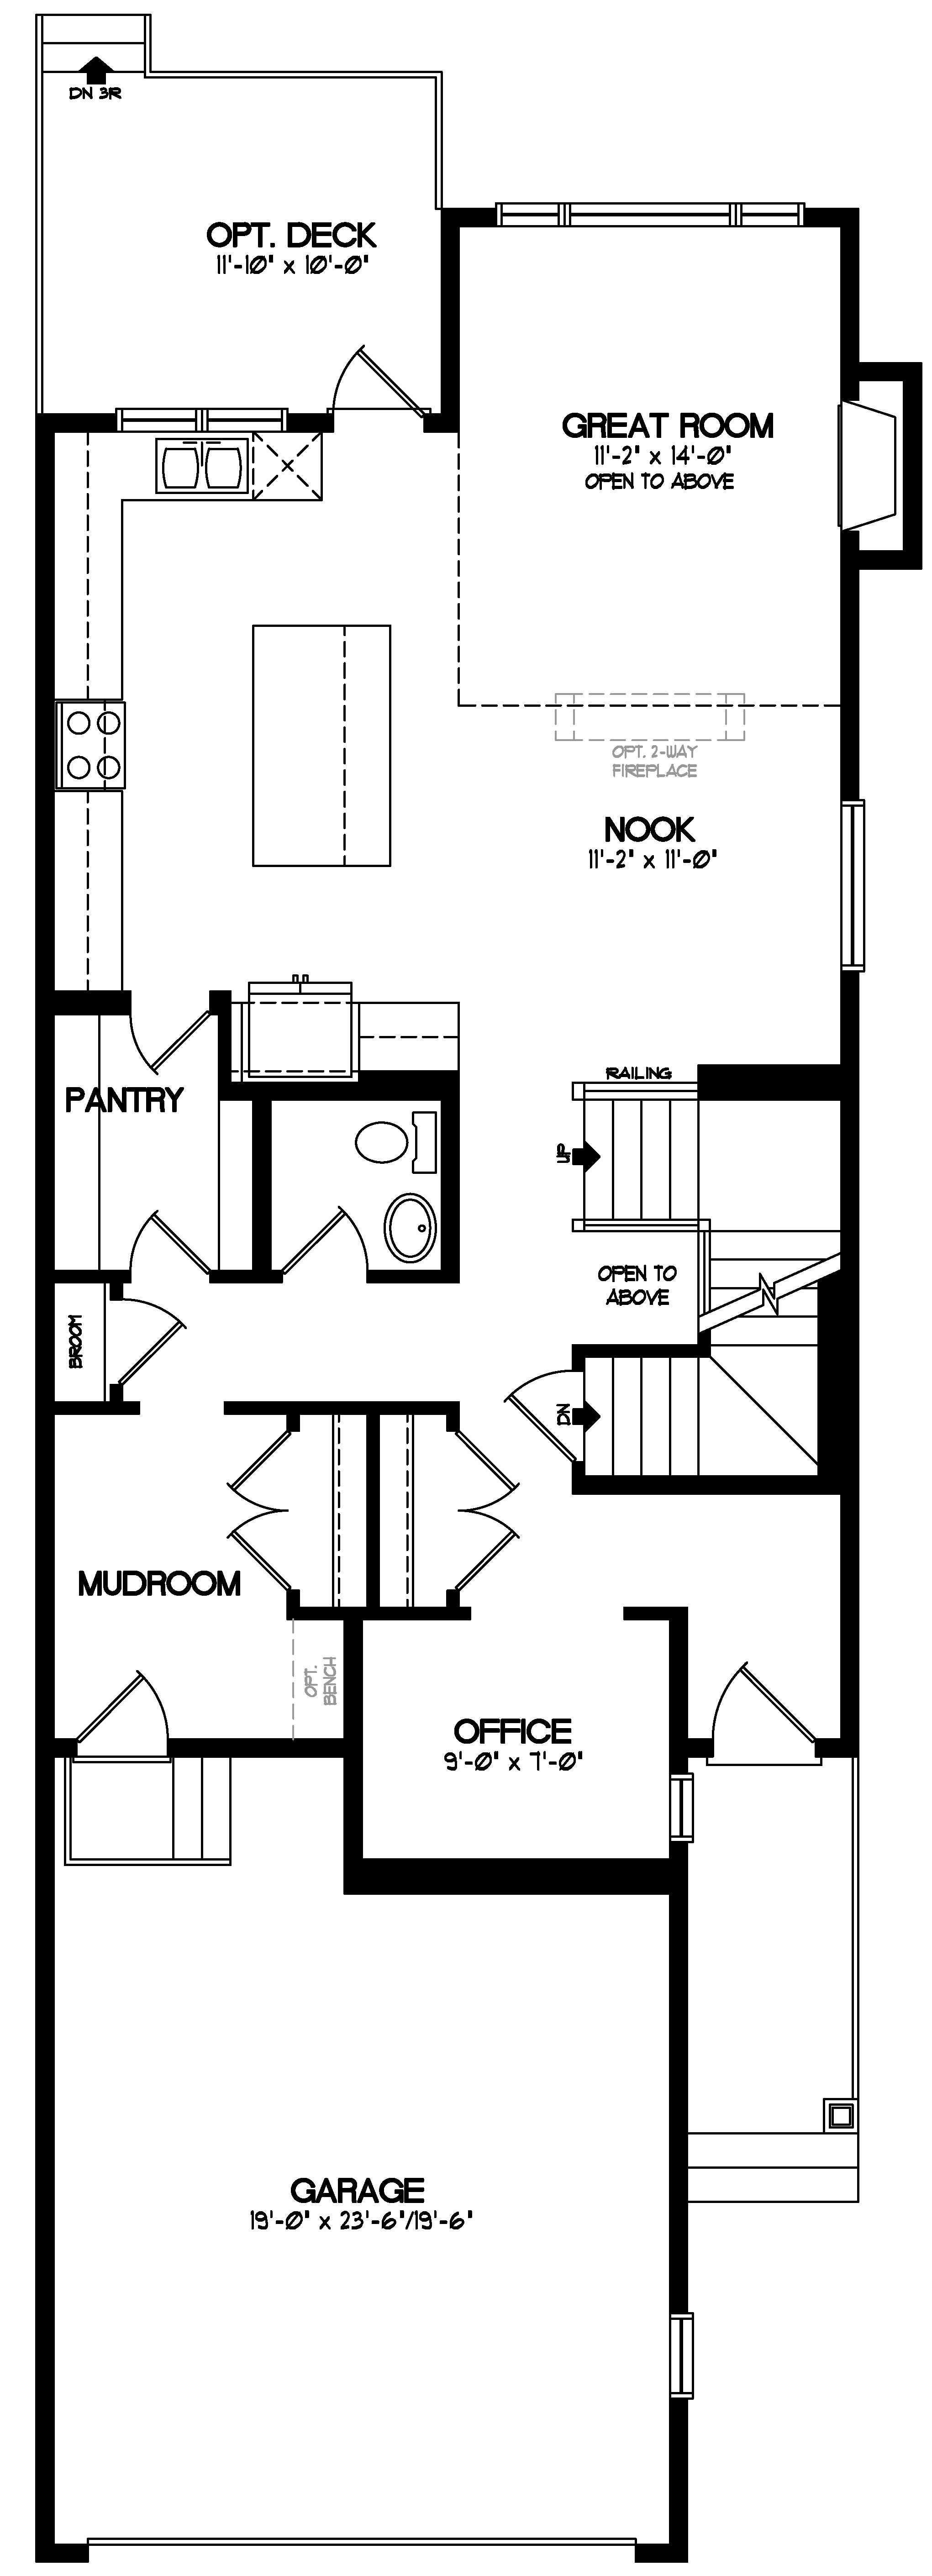 Leighton II Home Model Floor Plans